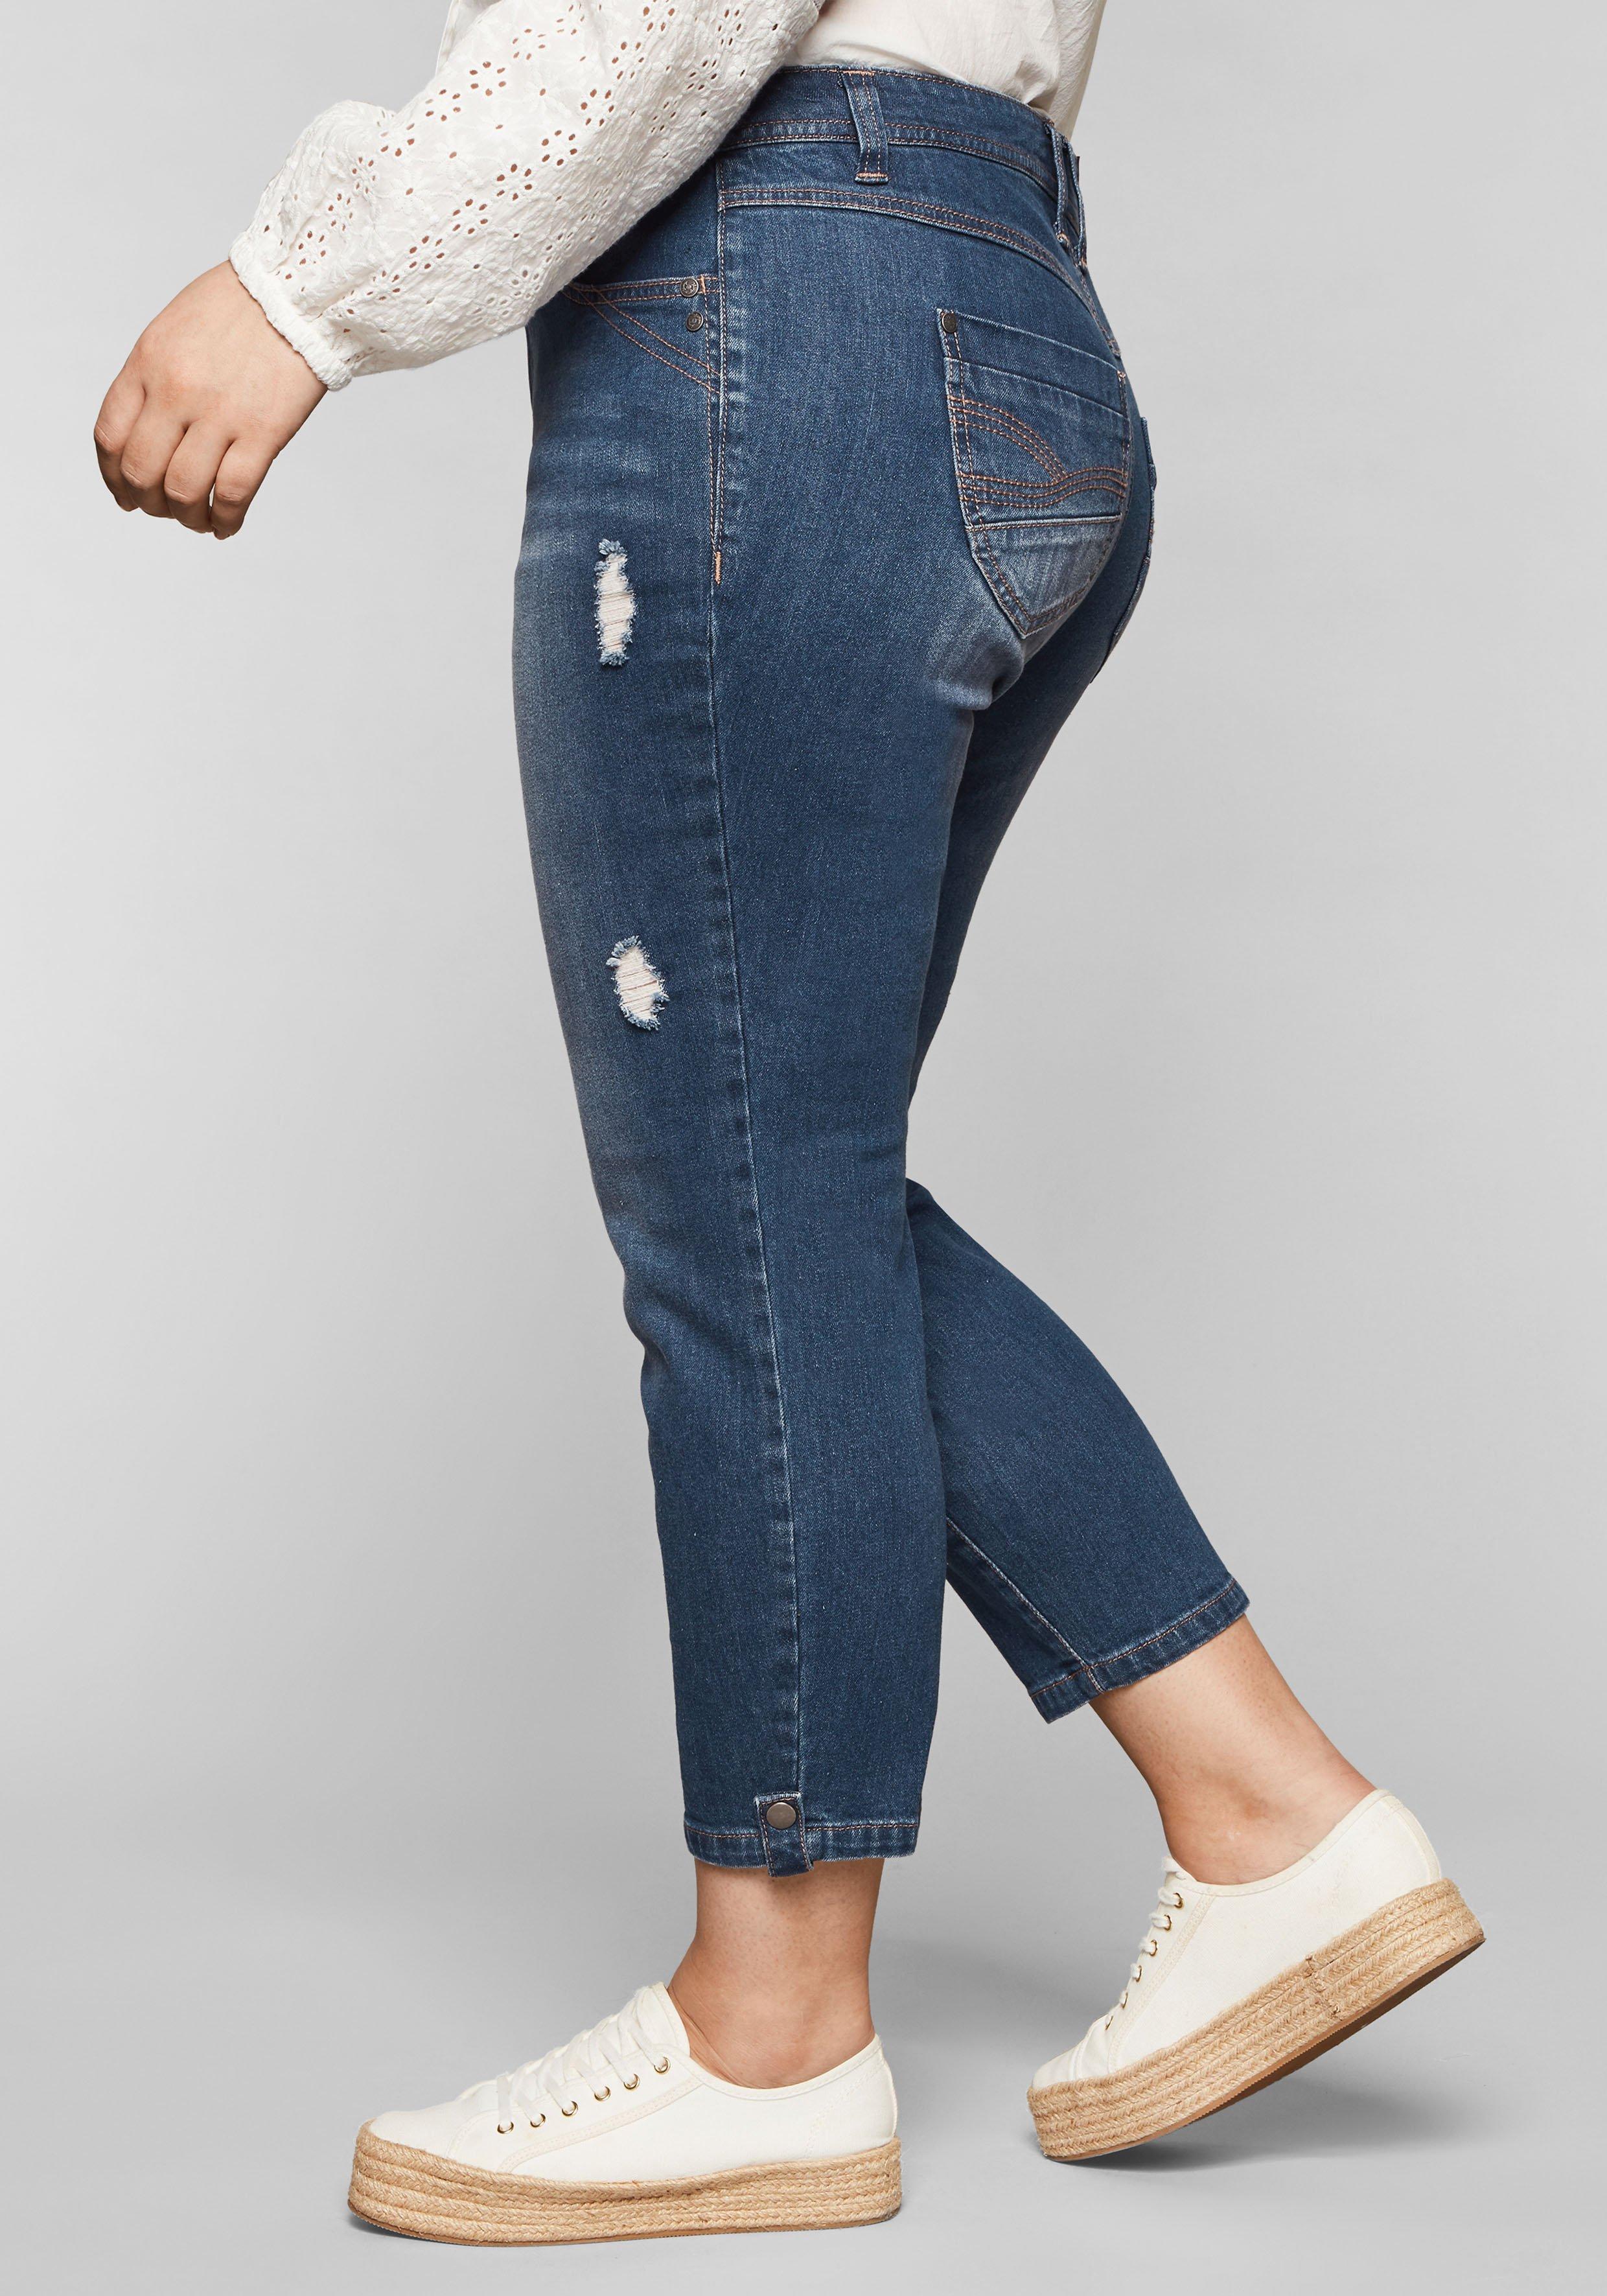 Damen Jeans große Größen 7/8 › Größe 58 | sheego ♥ Plus Size Mode